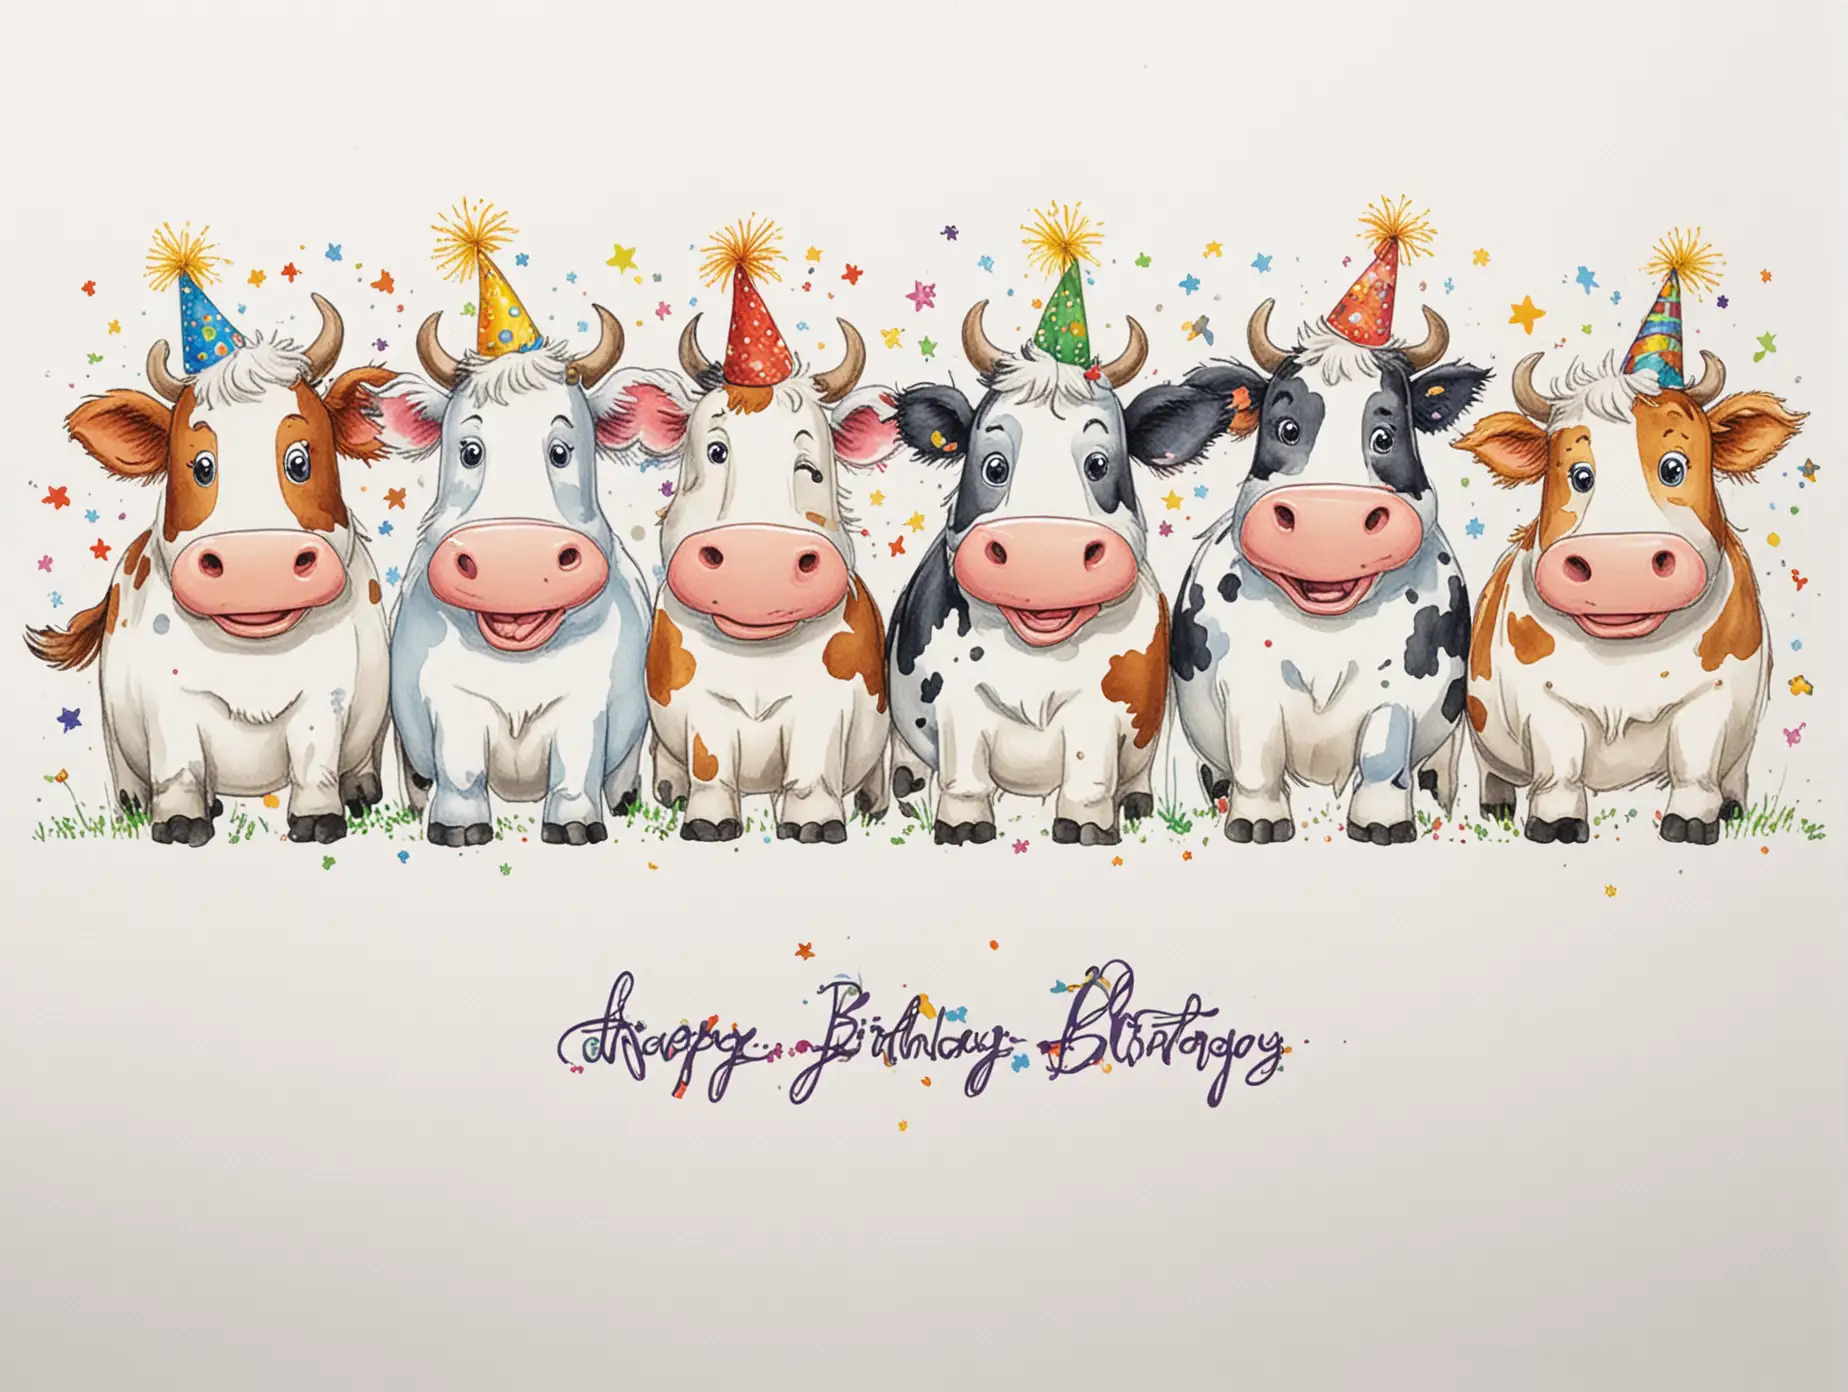 Joyful Cartoon Cows Celebrating Birthday on White Background